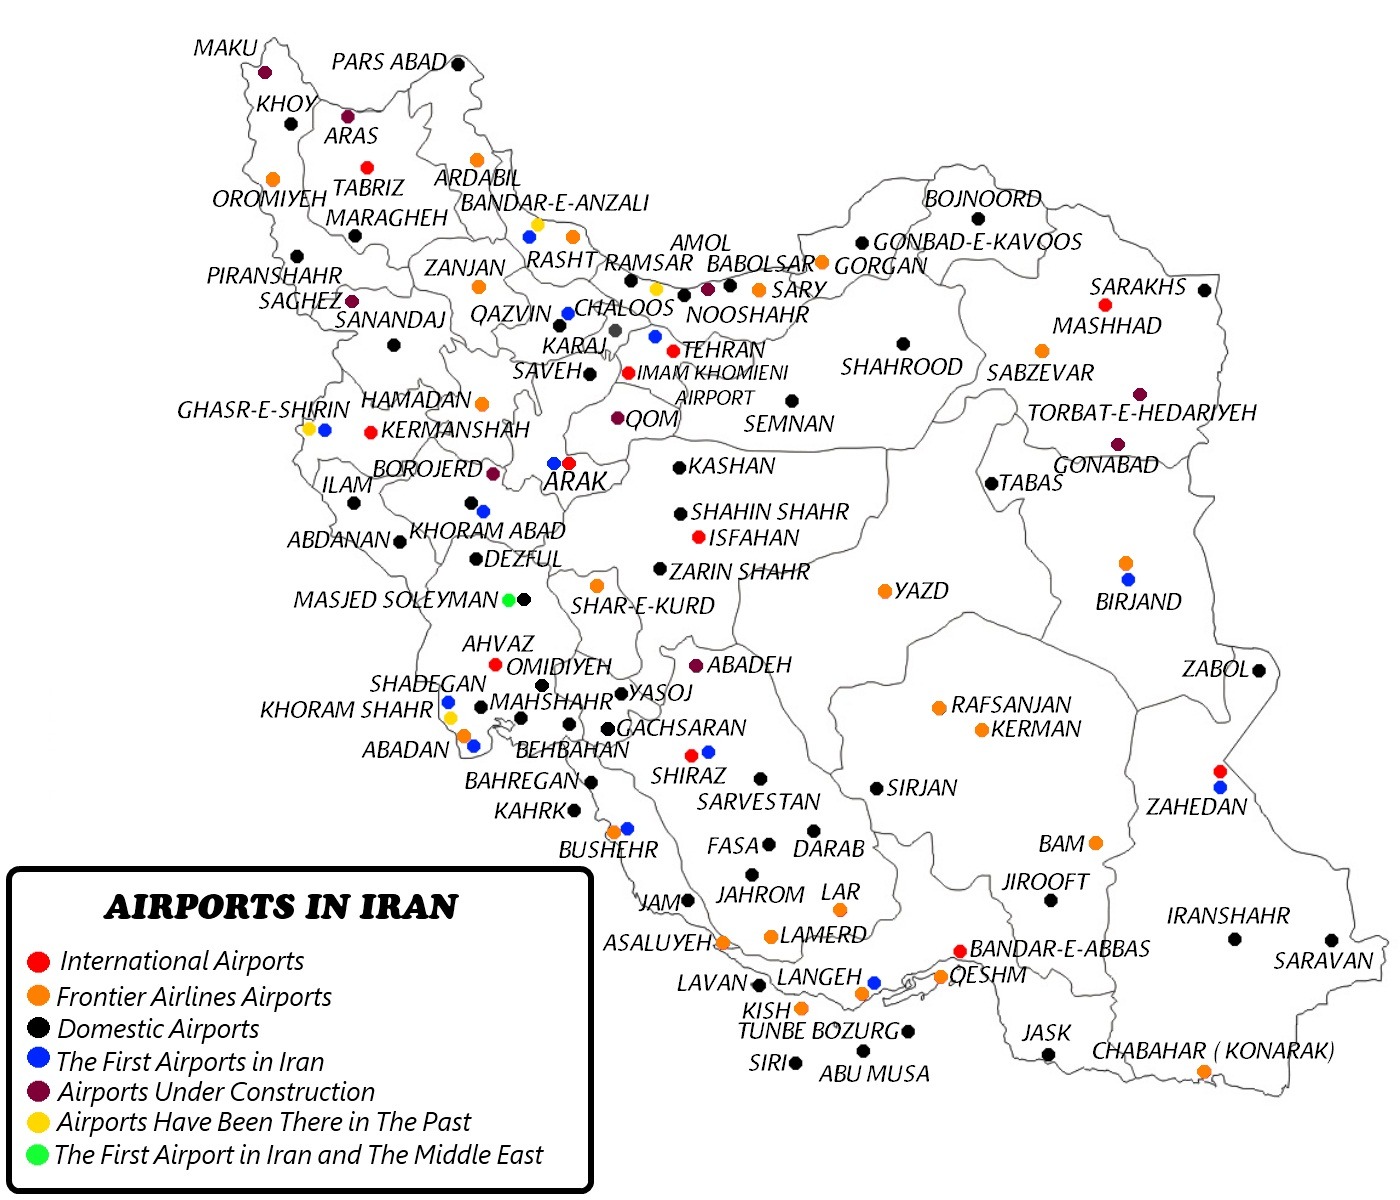 AIRPORTS IN IRAN